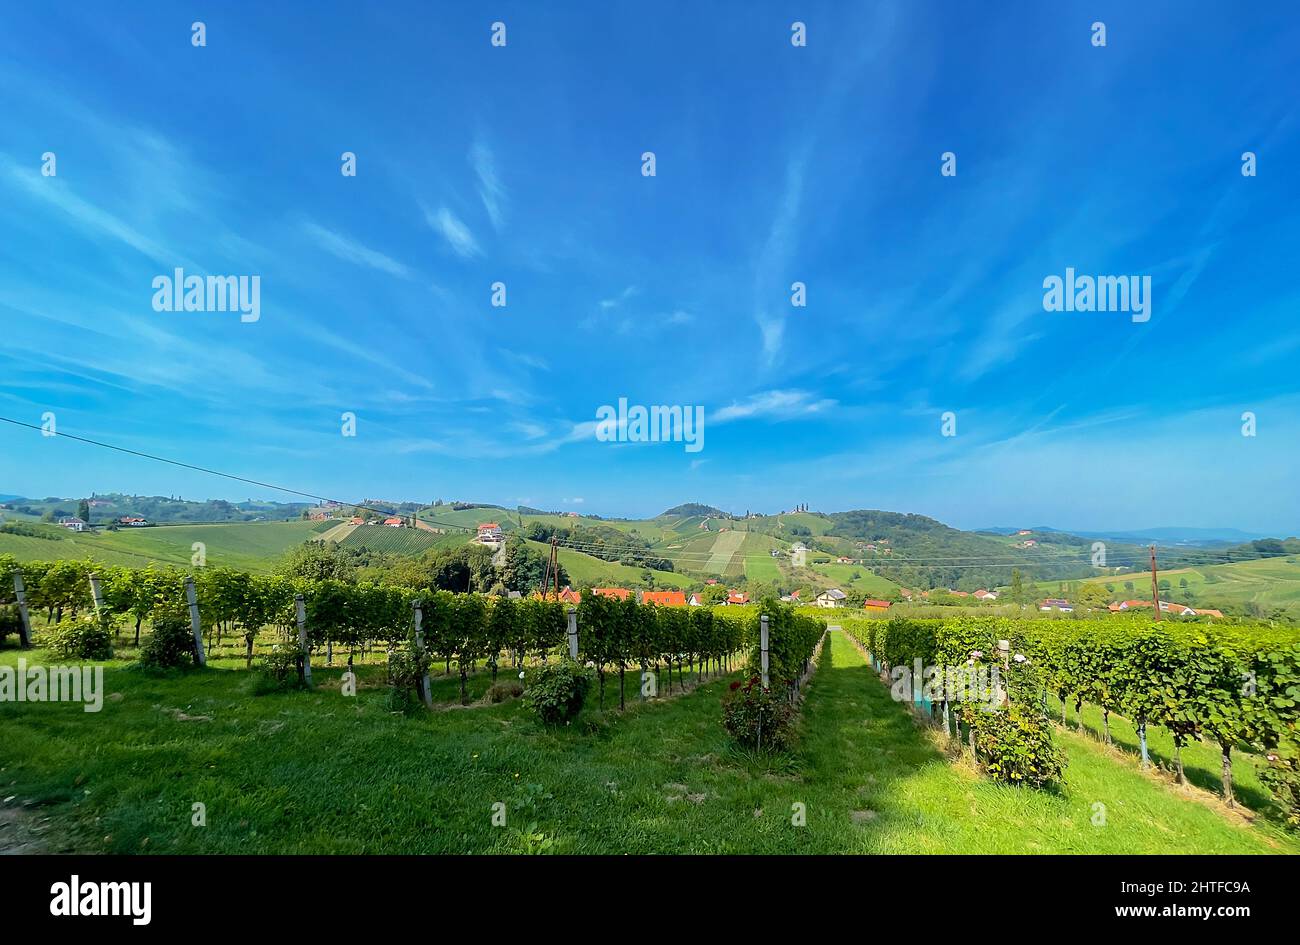 Wine-growing region of the sudost steiermark vulkanland austria Stock Photo